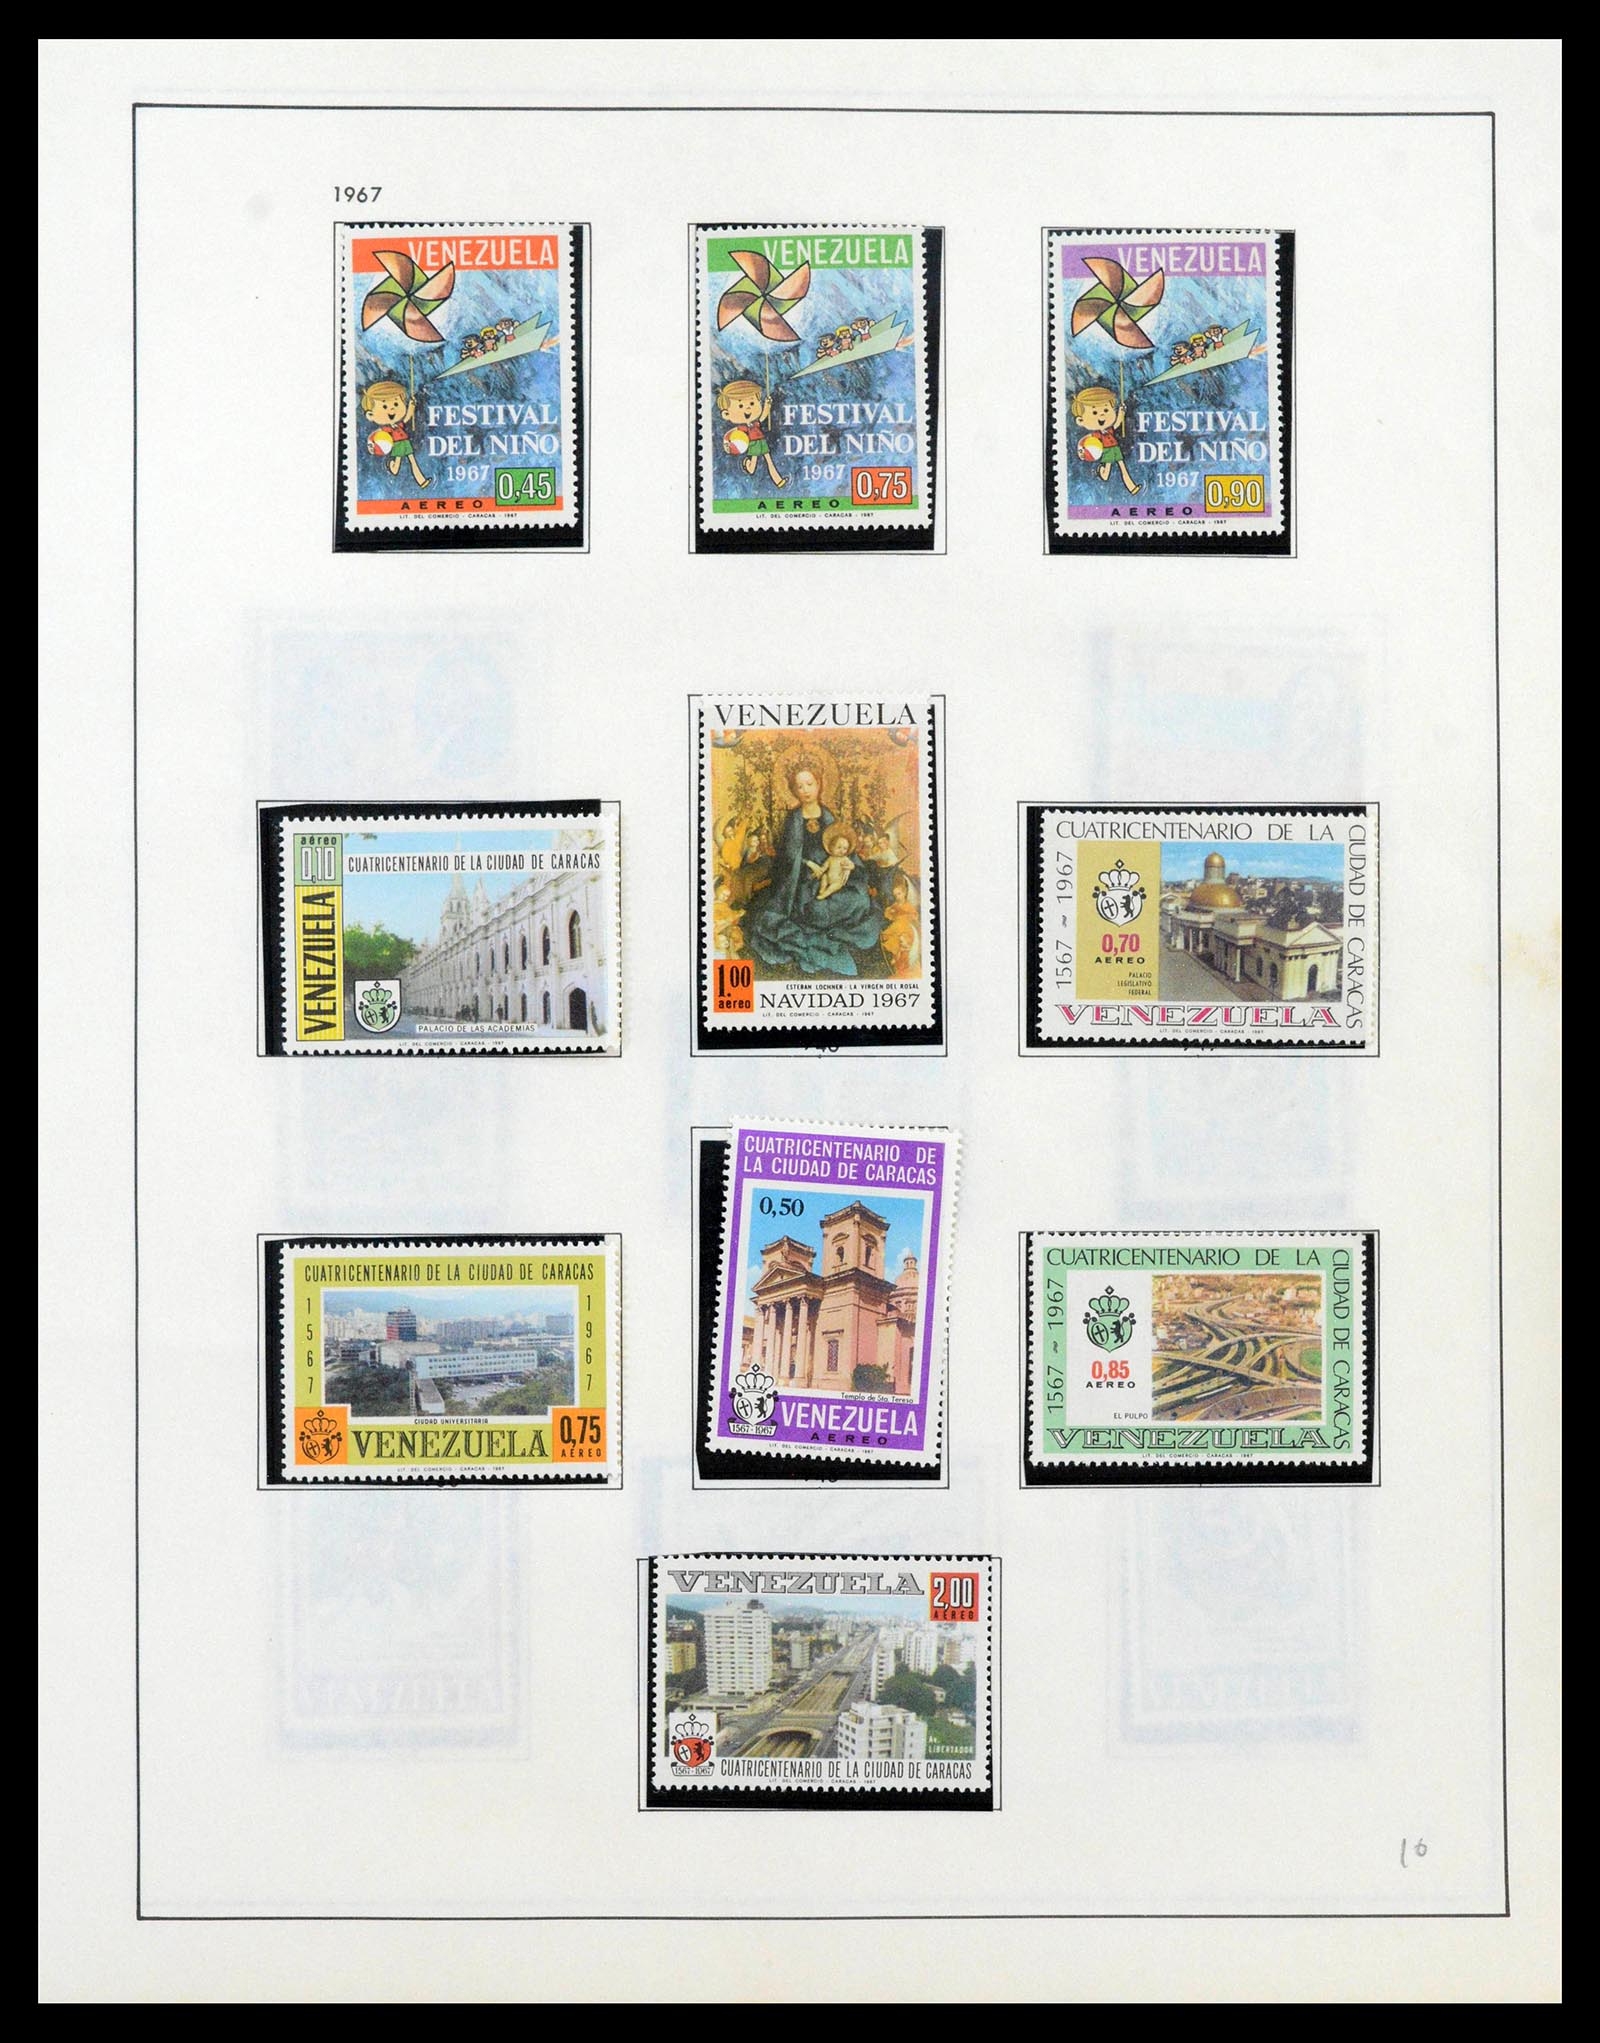 39436 0065 - Stamp collection 39436 Venezuela 1859-1985.